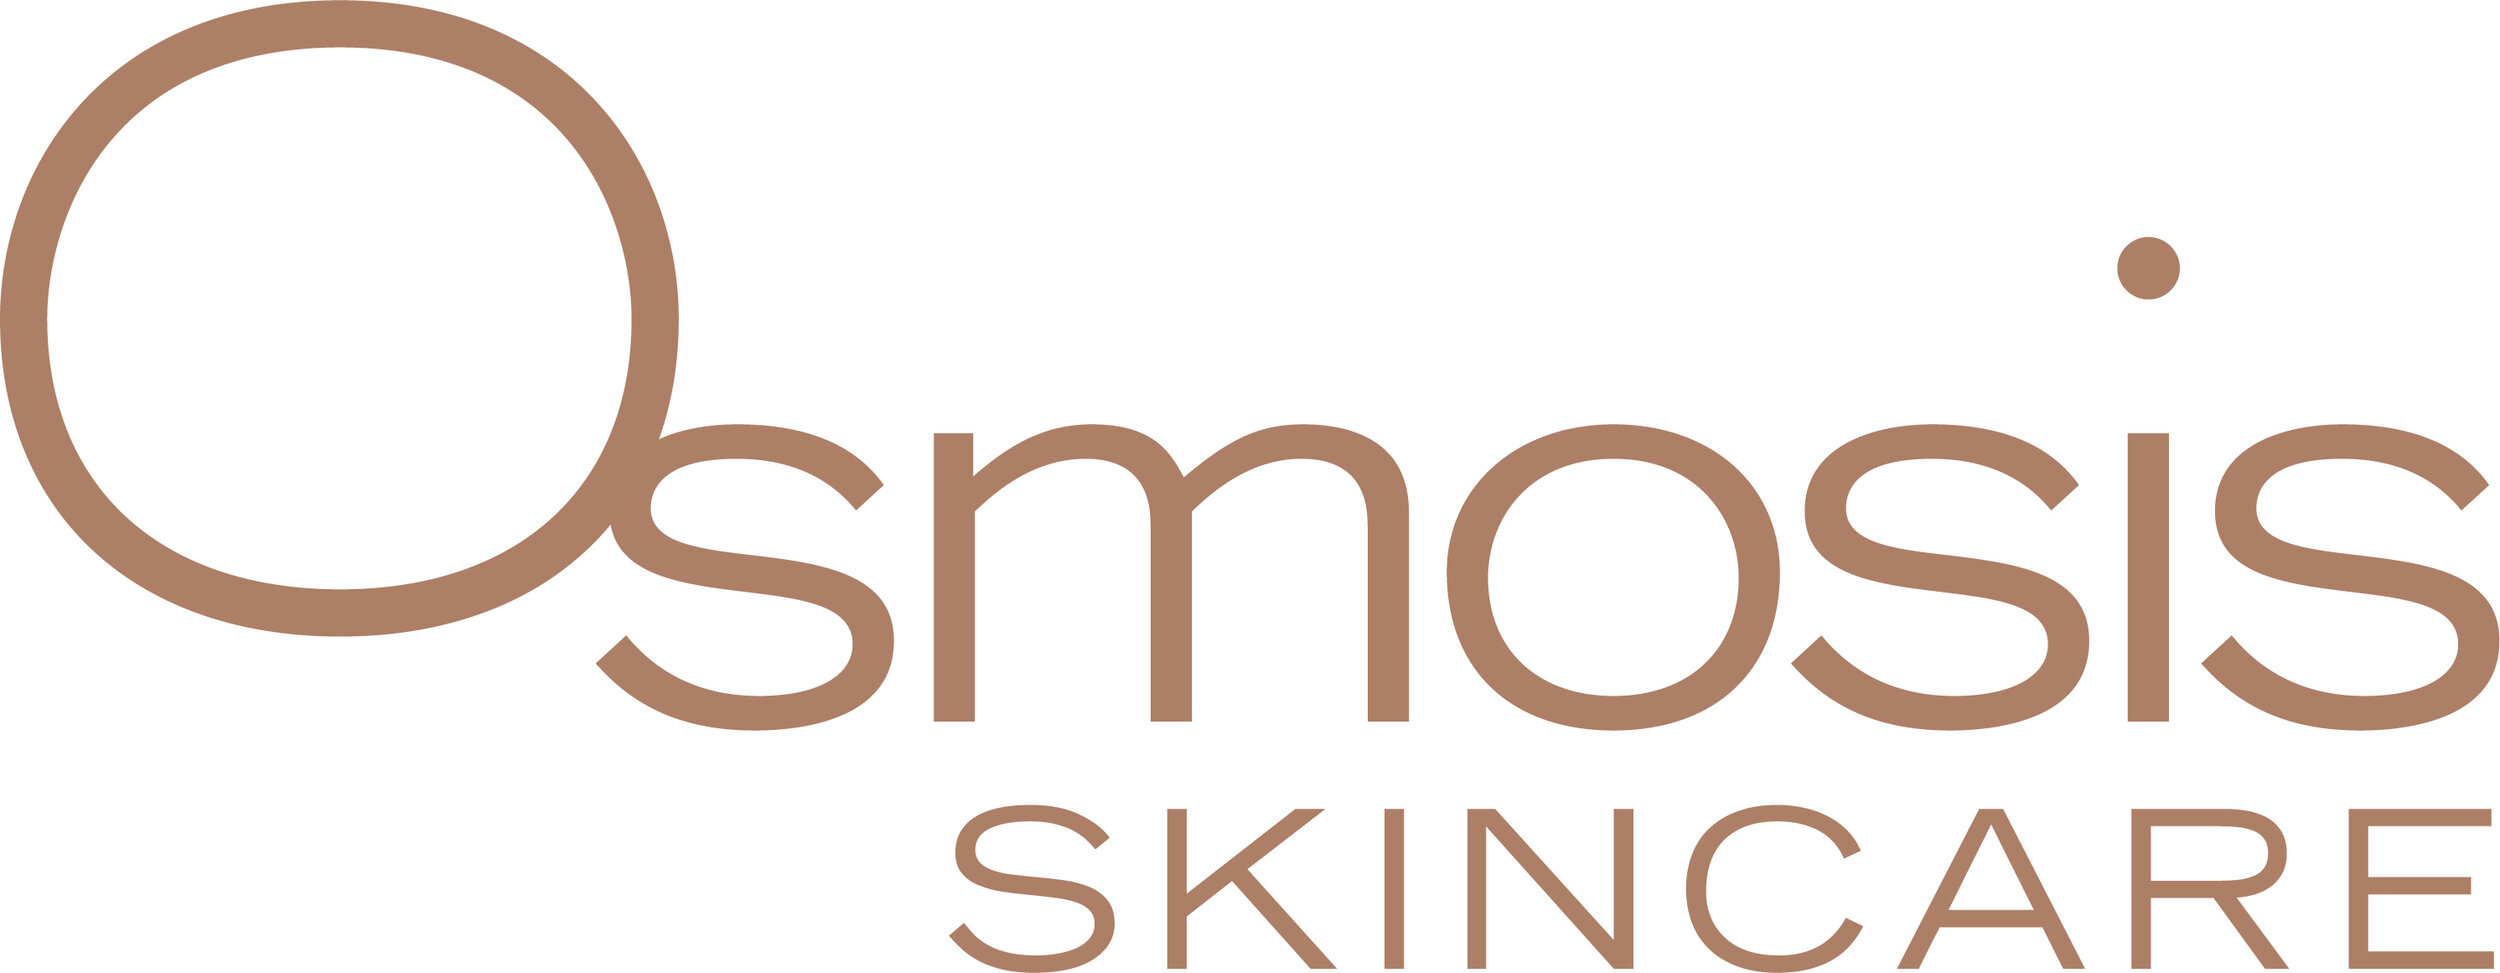 OsmosisSkincare-Logo-Copper.jpg